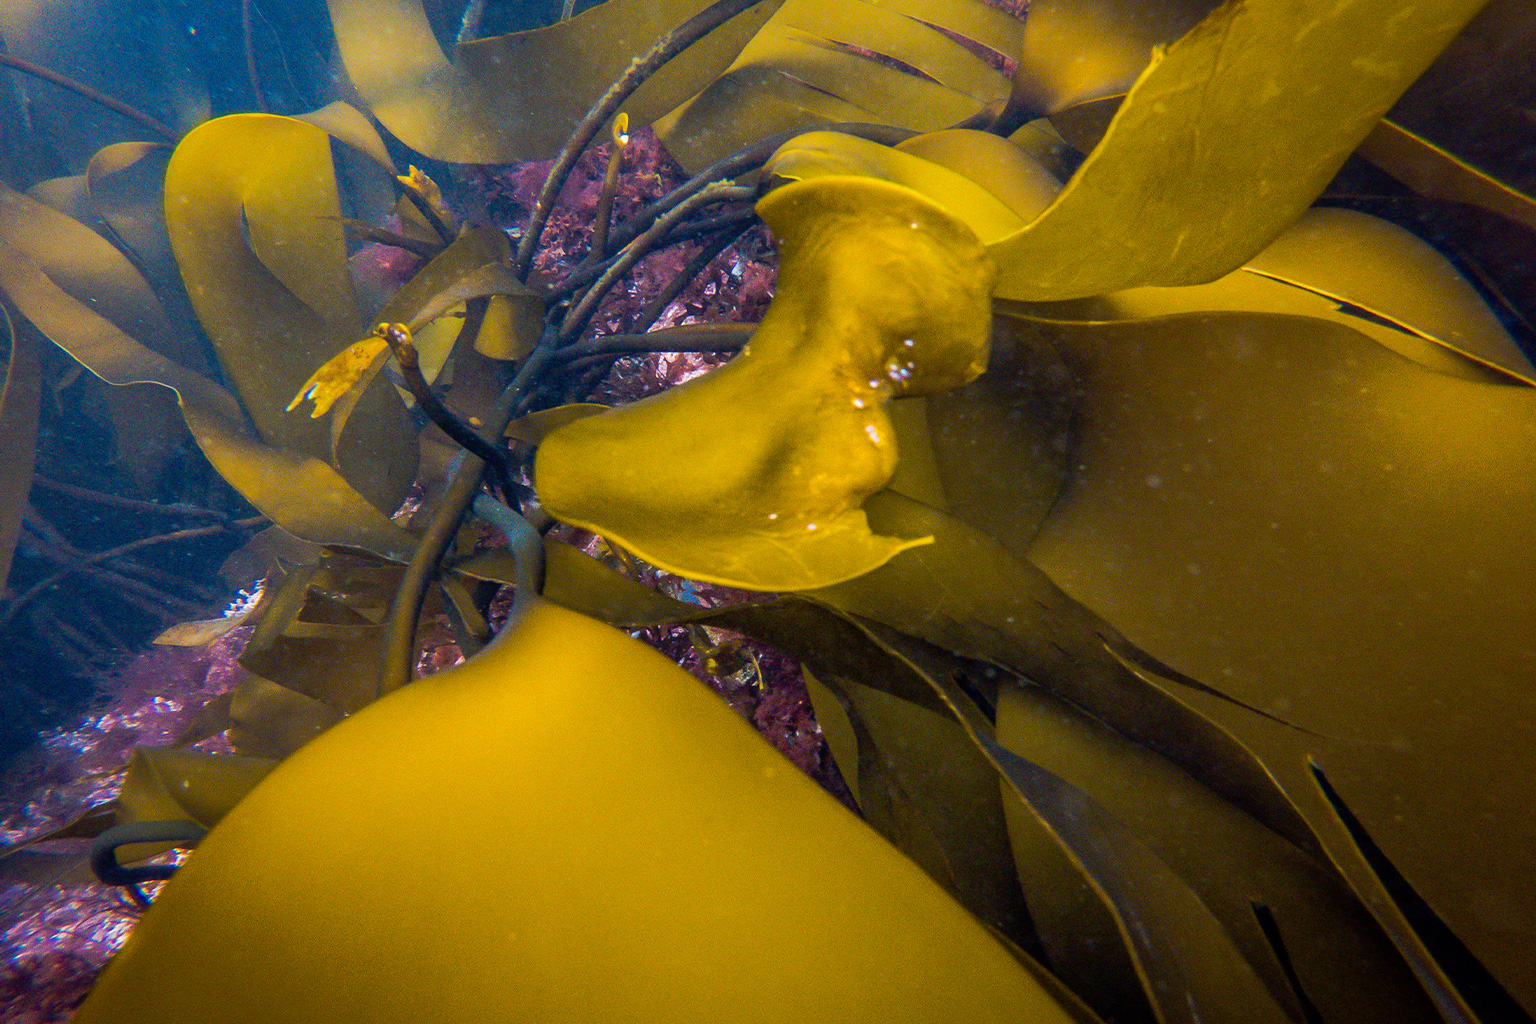 Giant wild kelp under water.